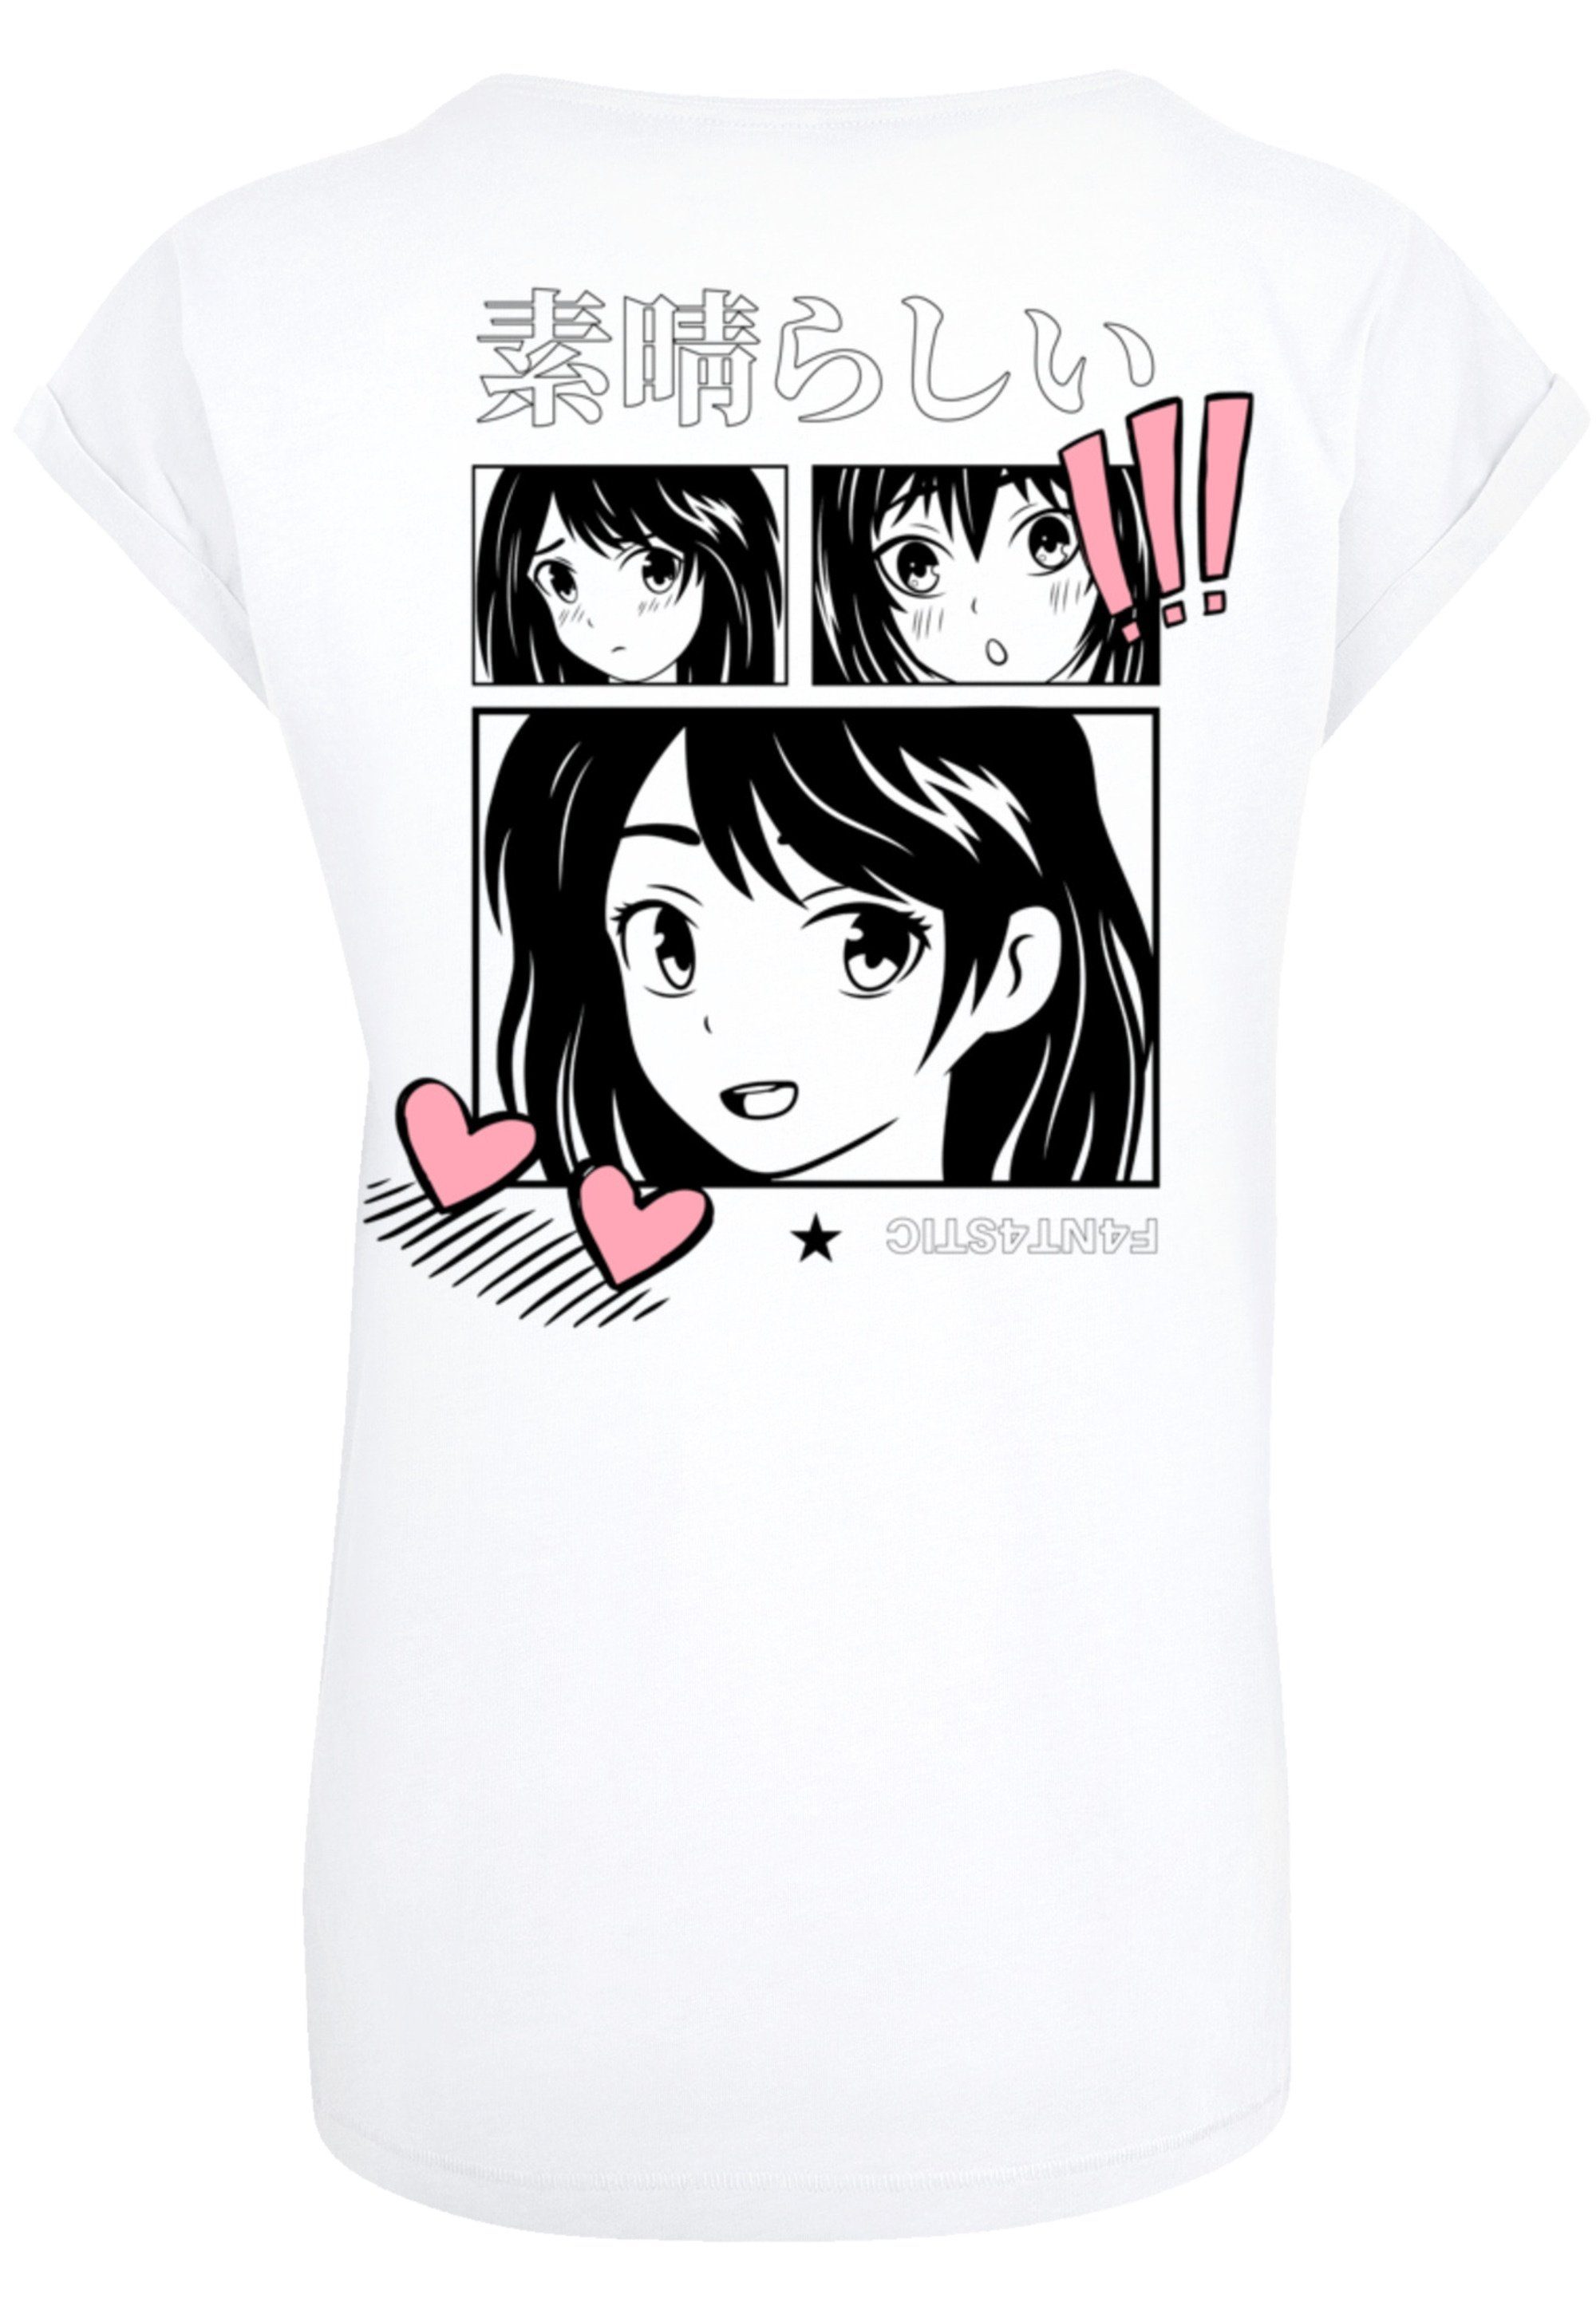 F4NT4STIC T-Shirt Manga Anime Japan Grafik Print, Das Model ist 170 cm groß  und trägt Größe M